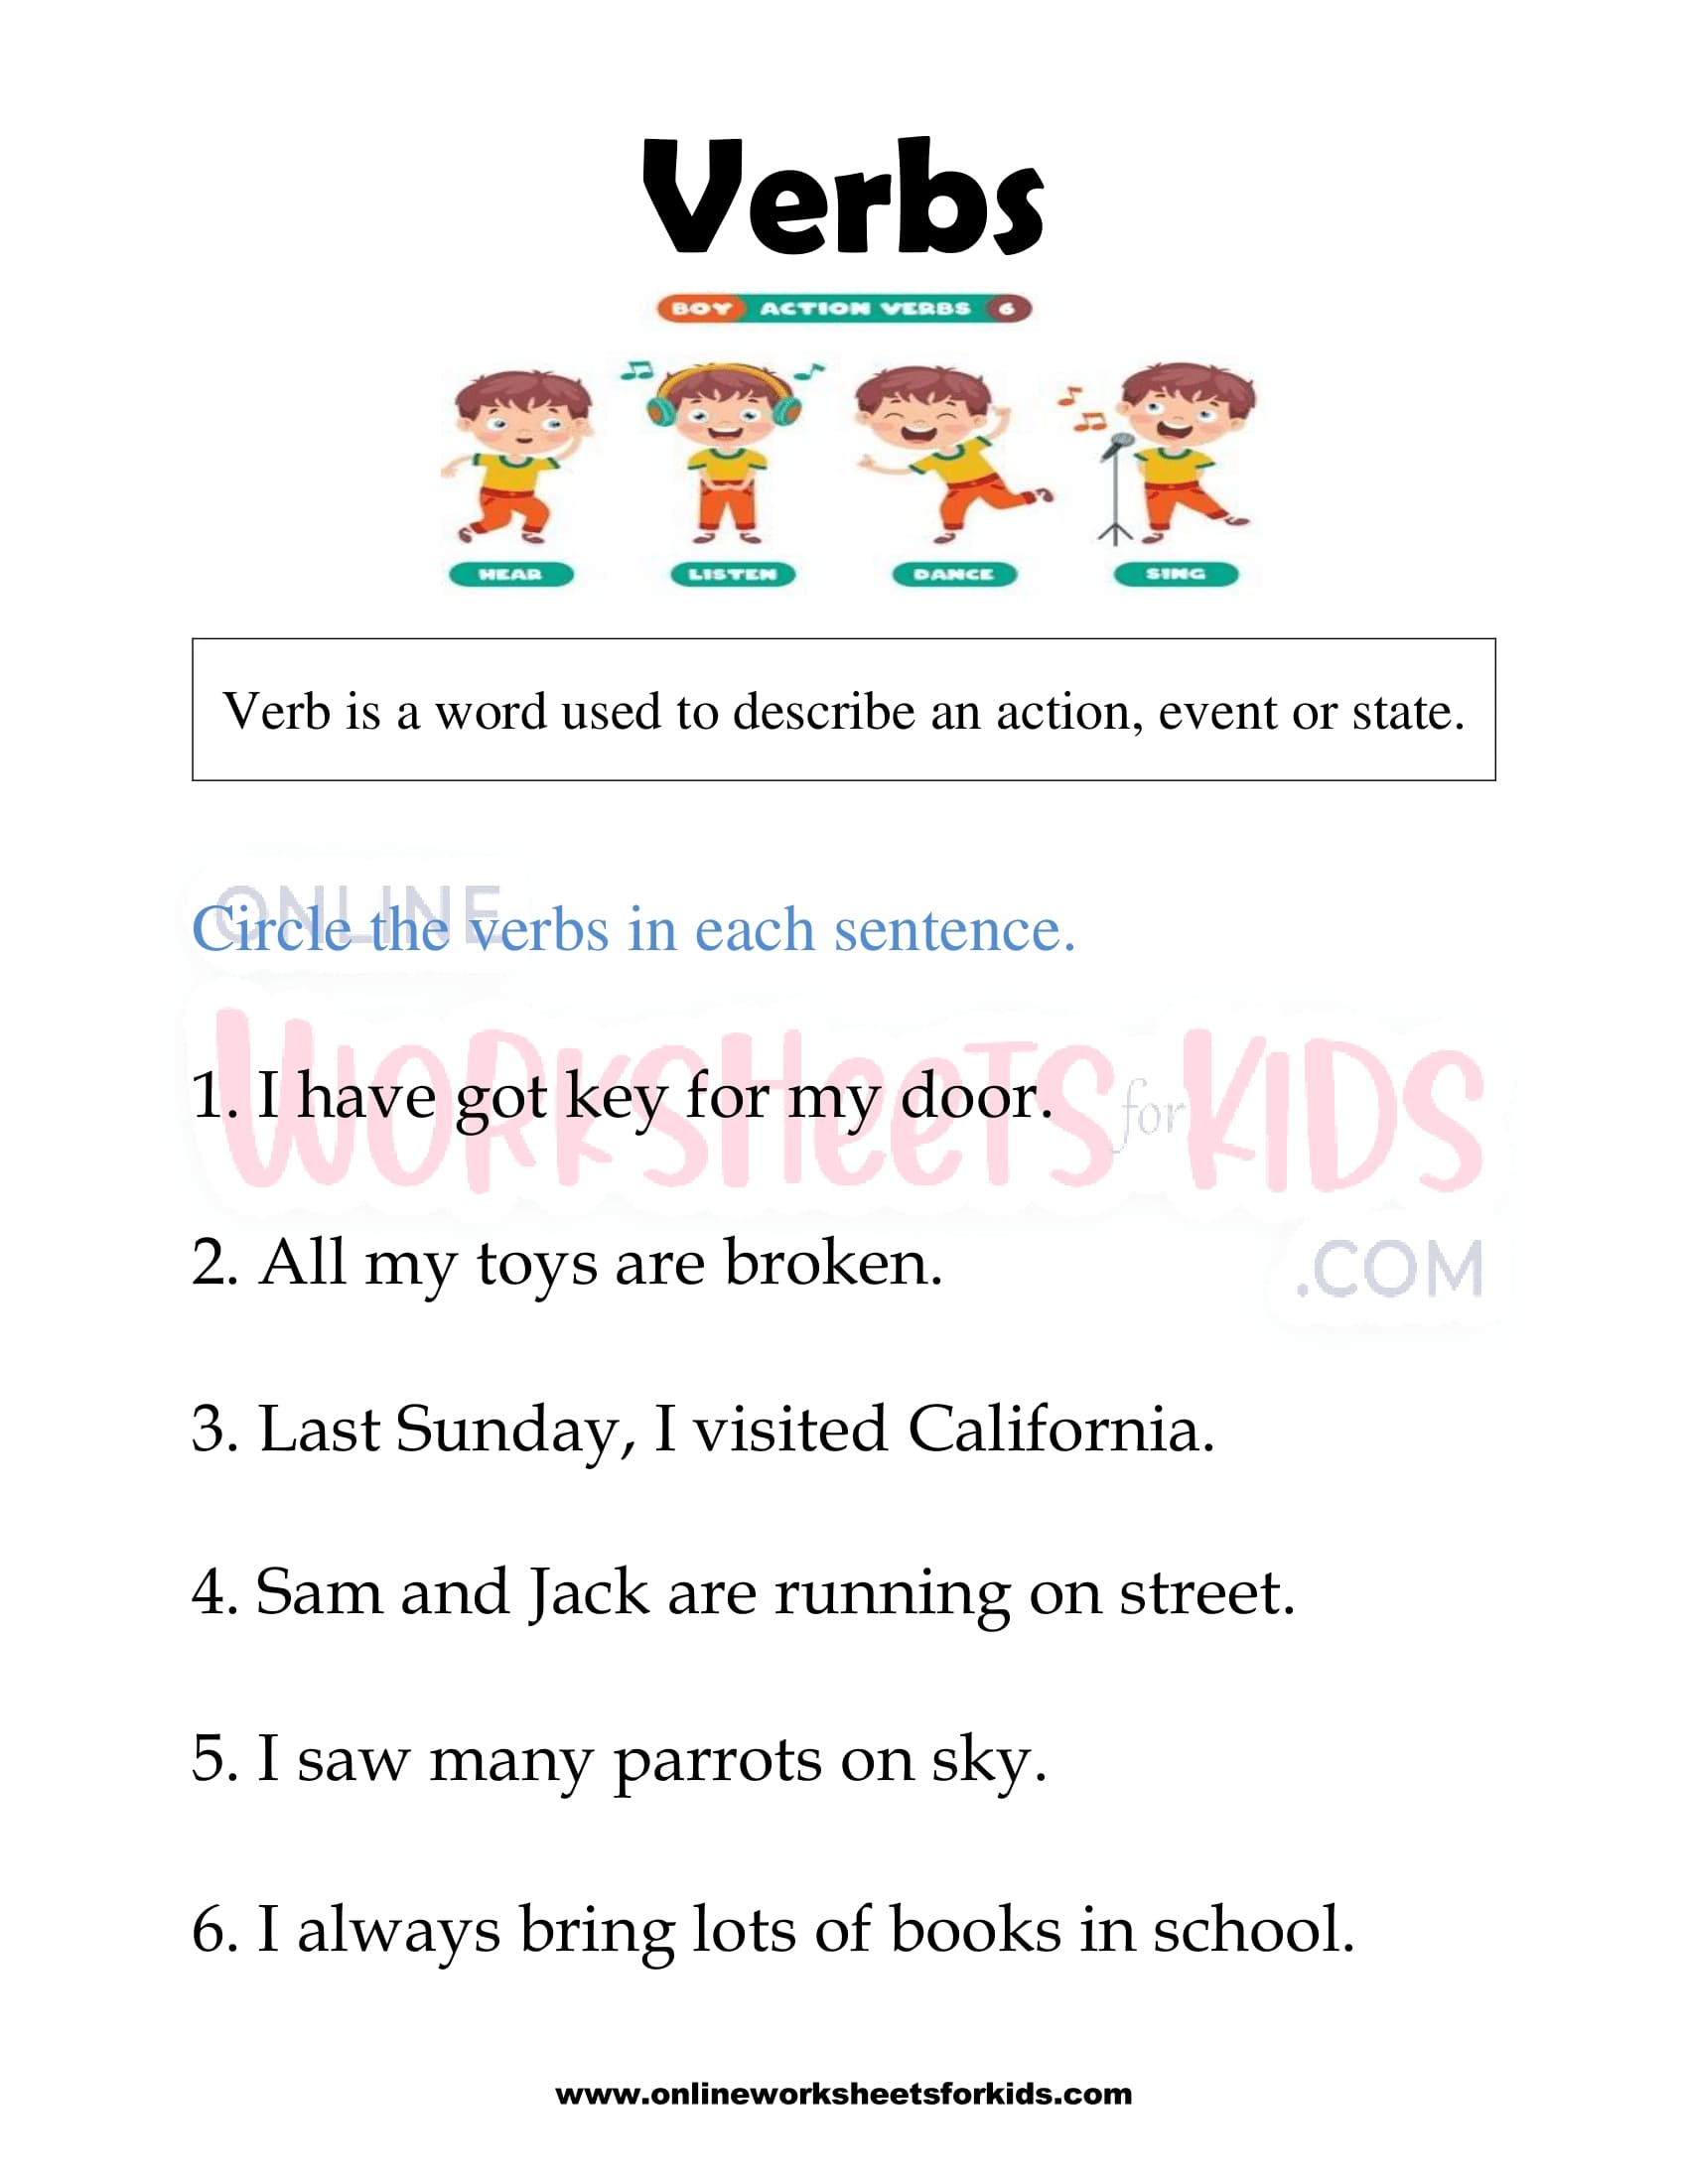 verbs-worksheets-for-grade-1-6